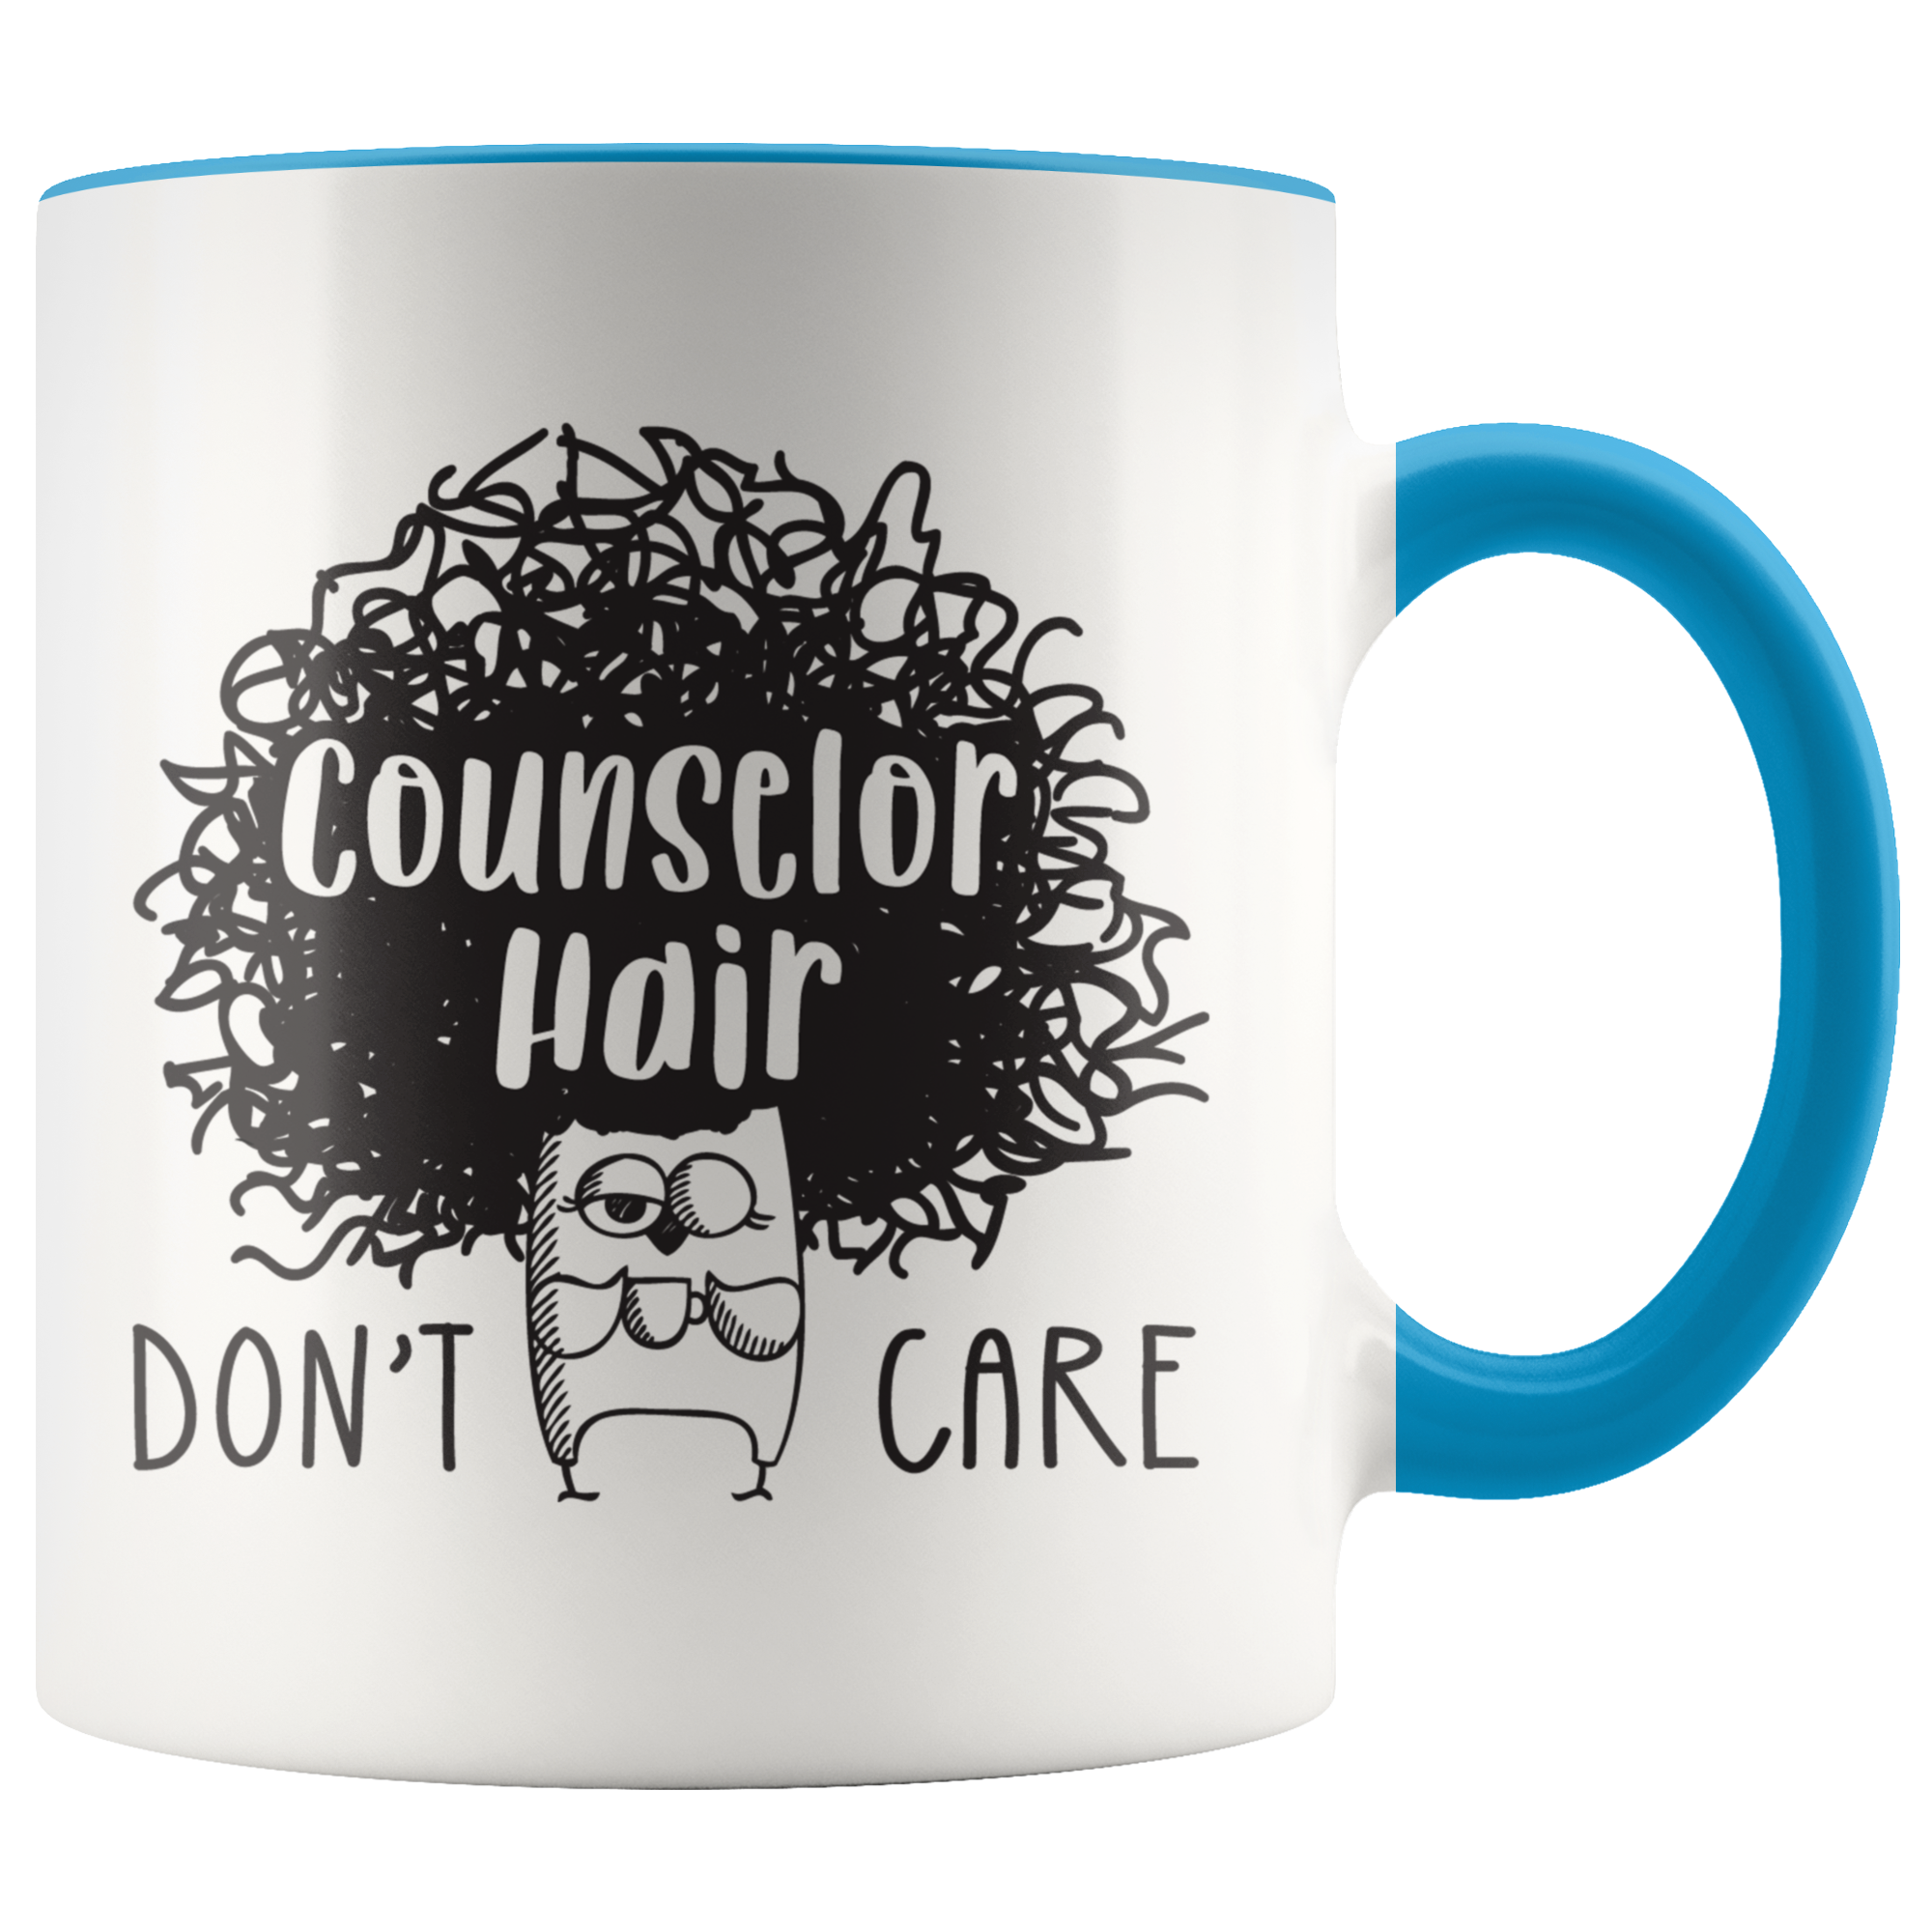 Counselor Hair Don't Care Coffee Mug